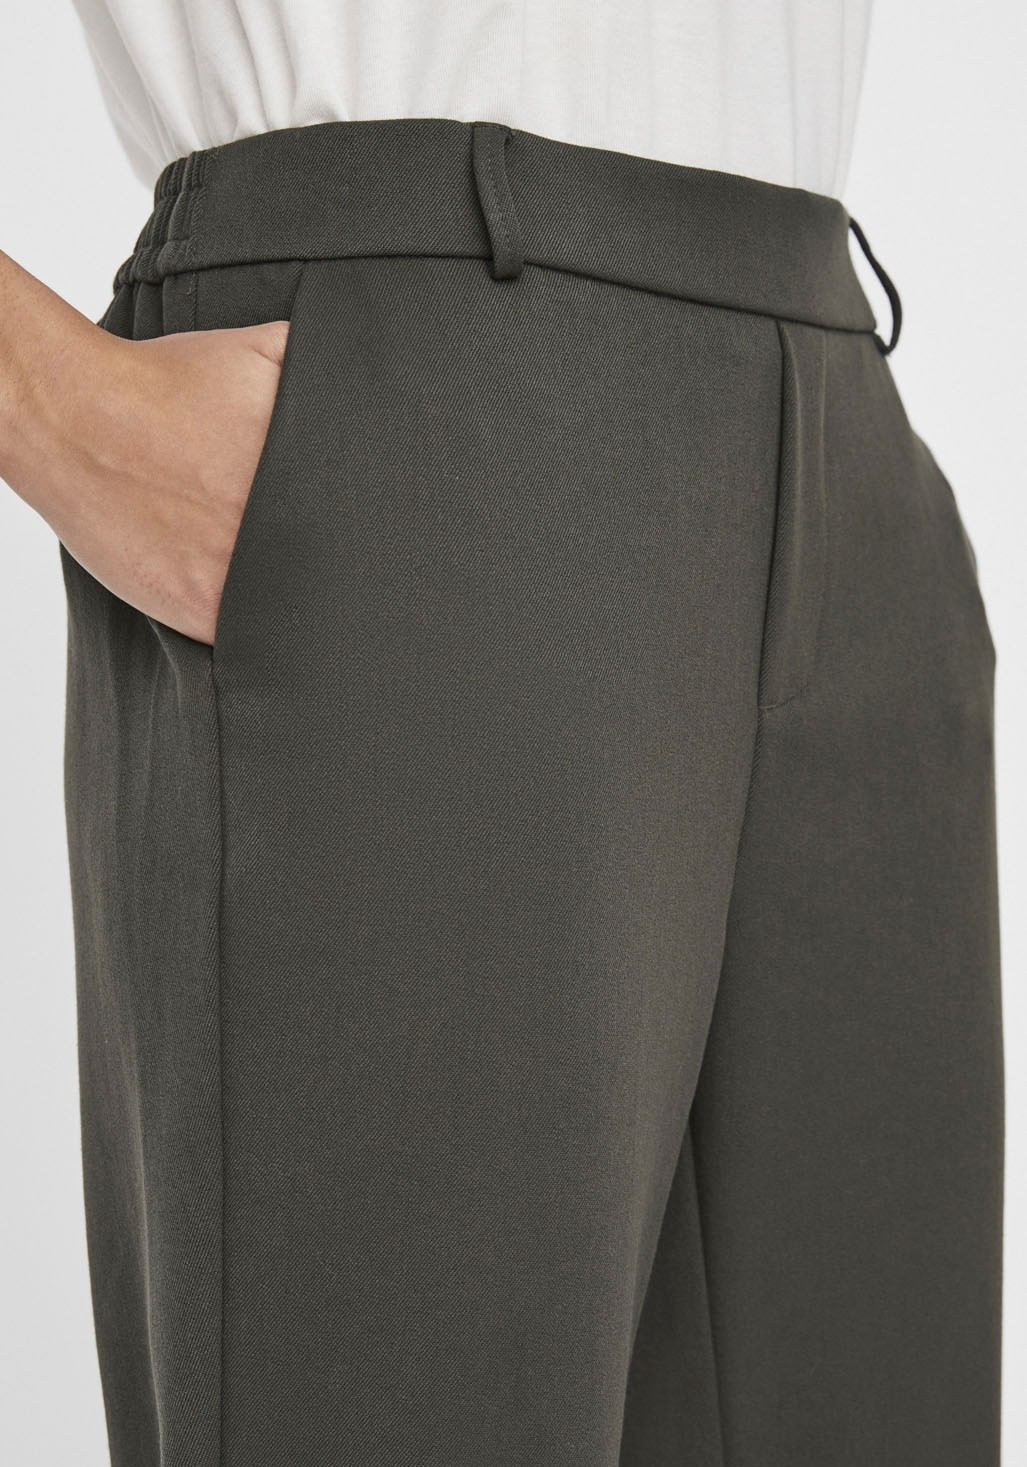 Vero Moda Tailored Trousers (10225280) peat ab 18,99 € | Preisvergleich bei